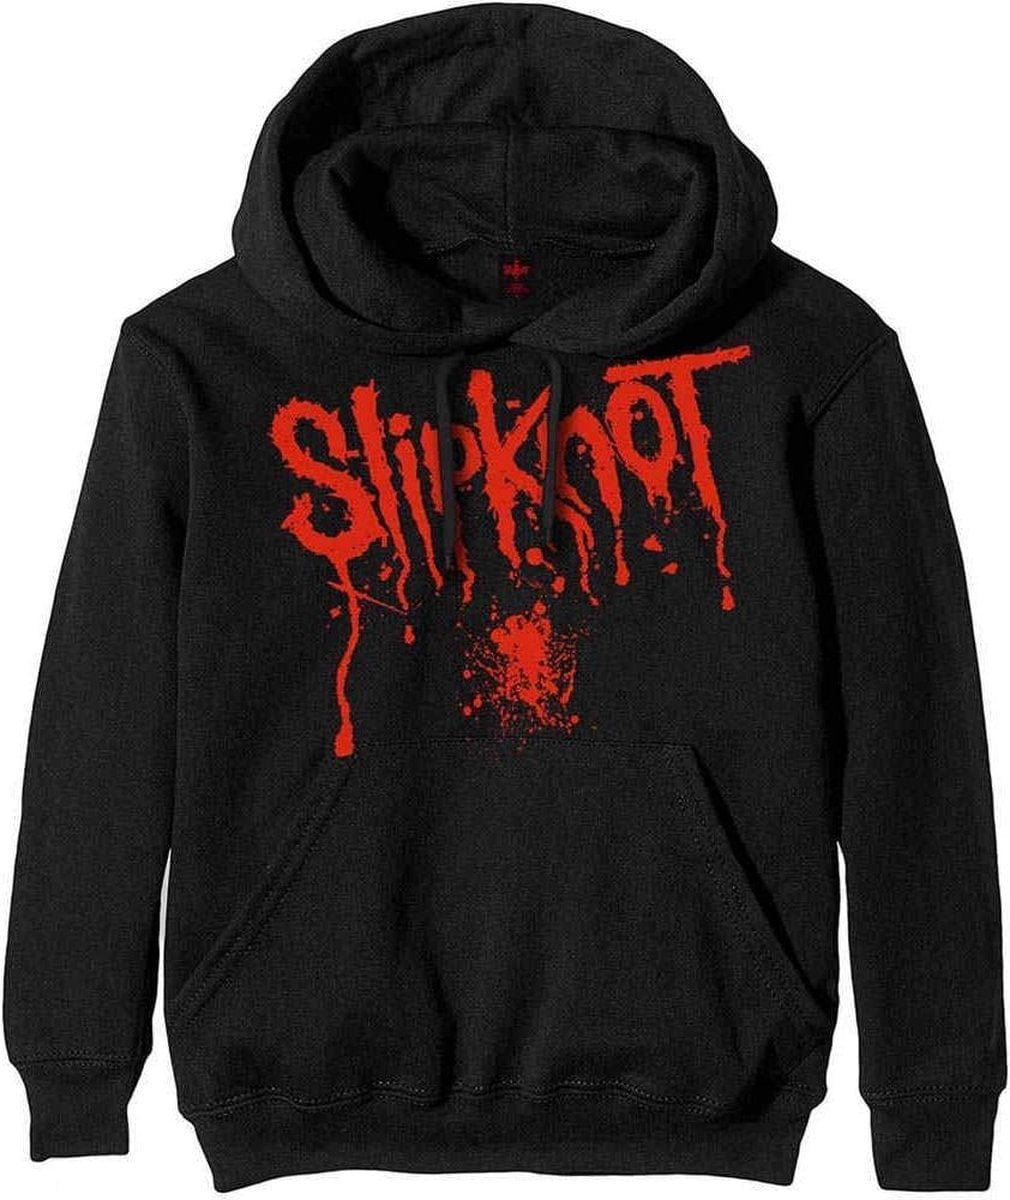 Slipknot - Splatter - Black - Medium [Hoodies]